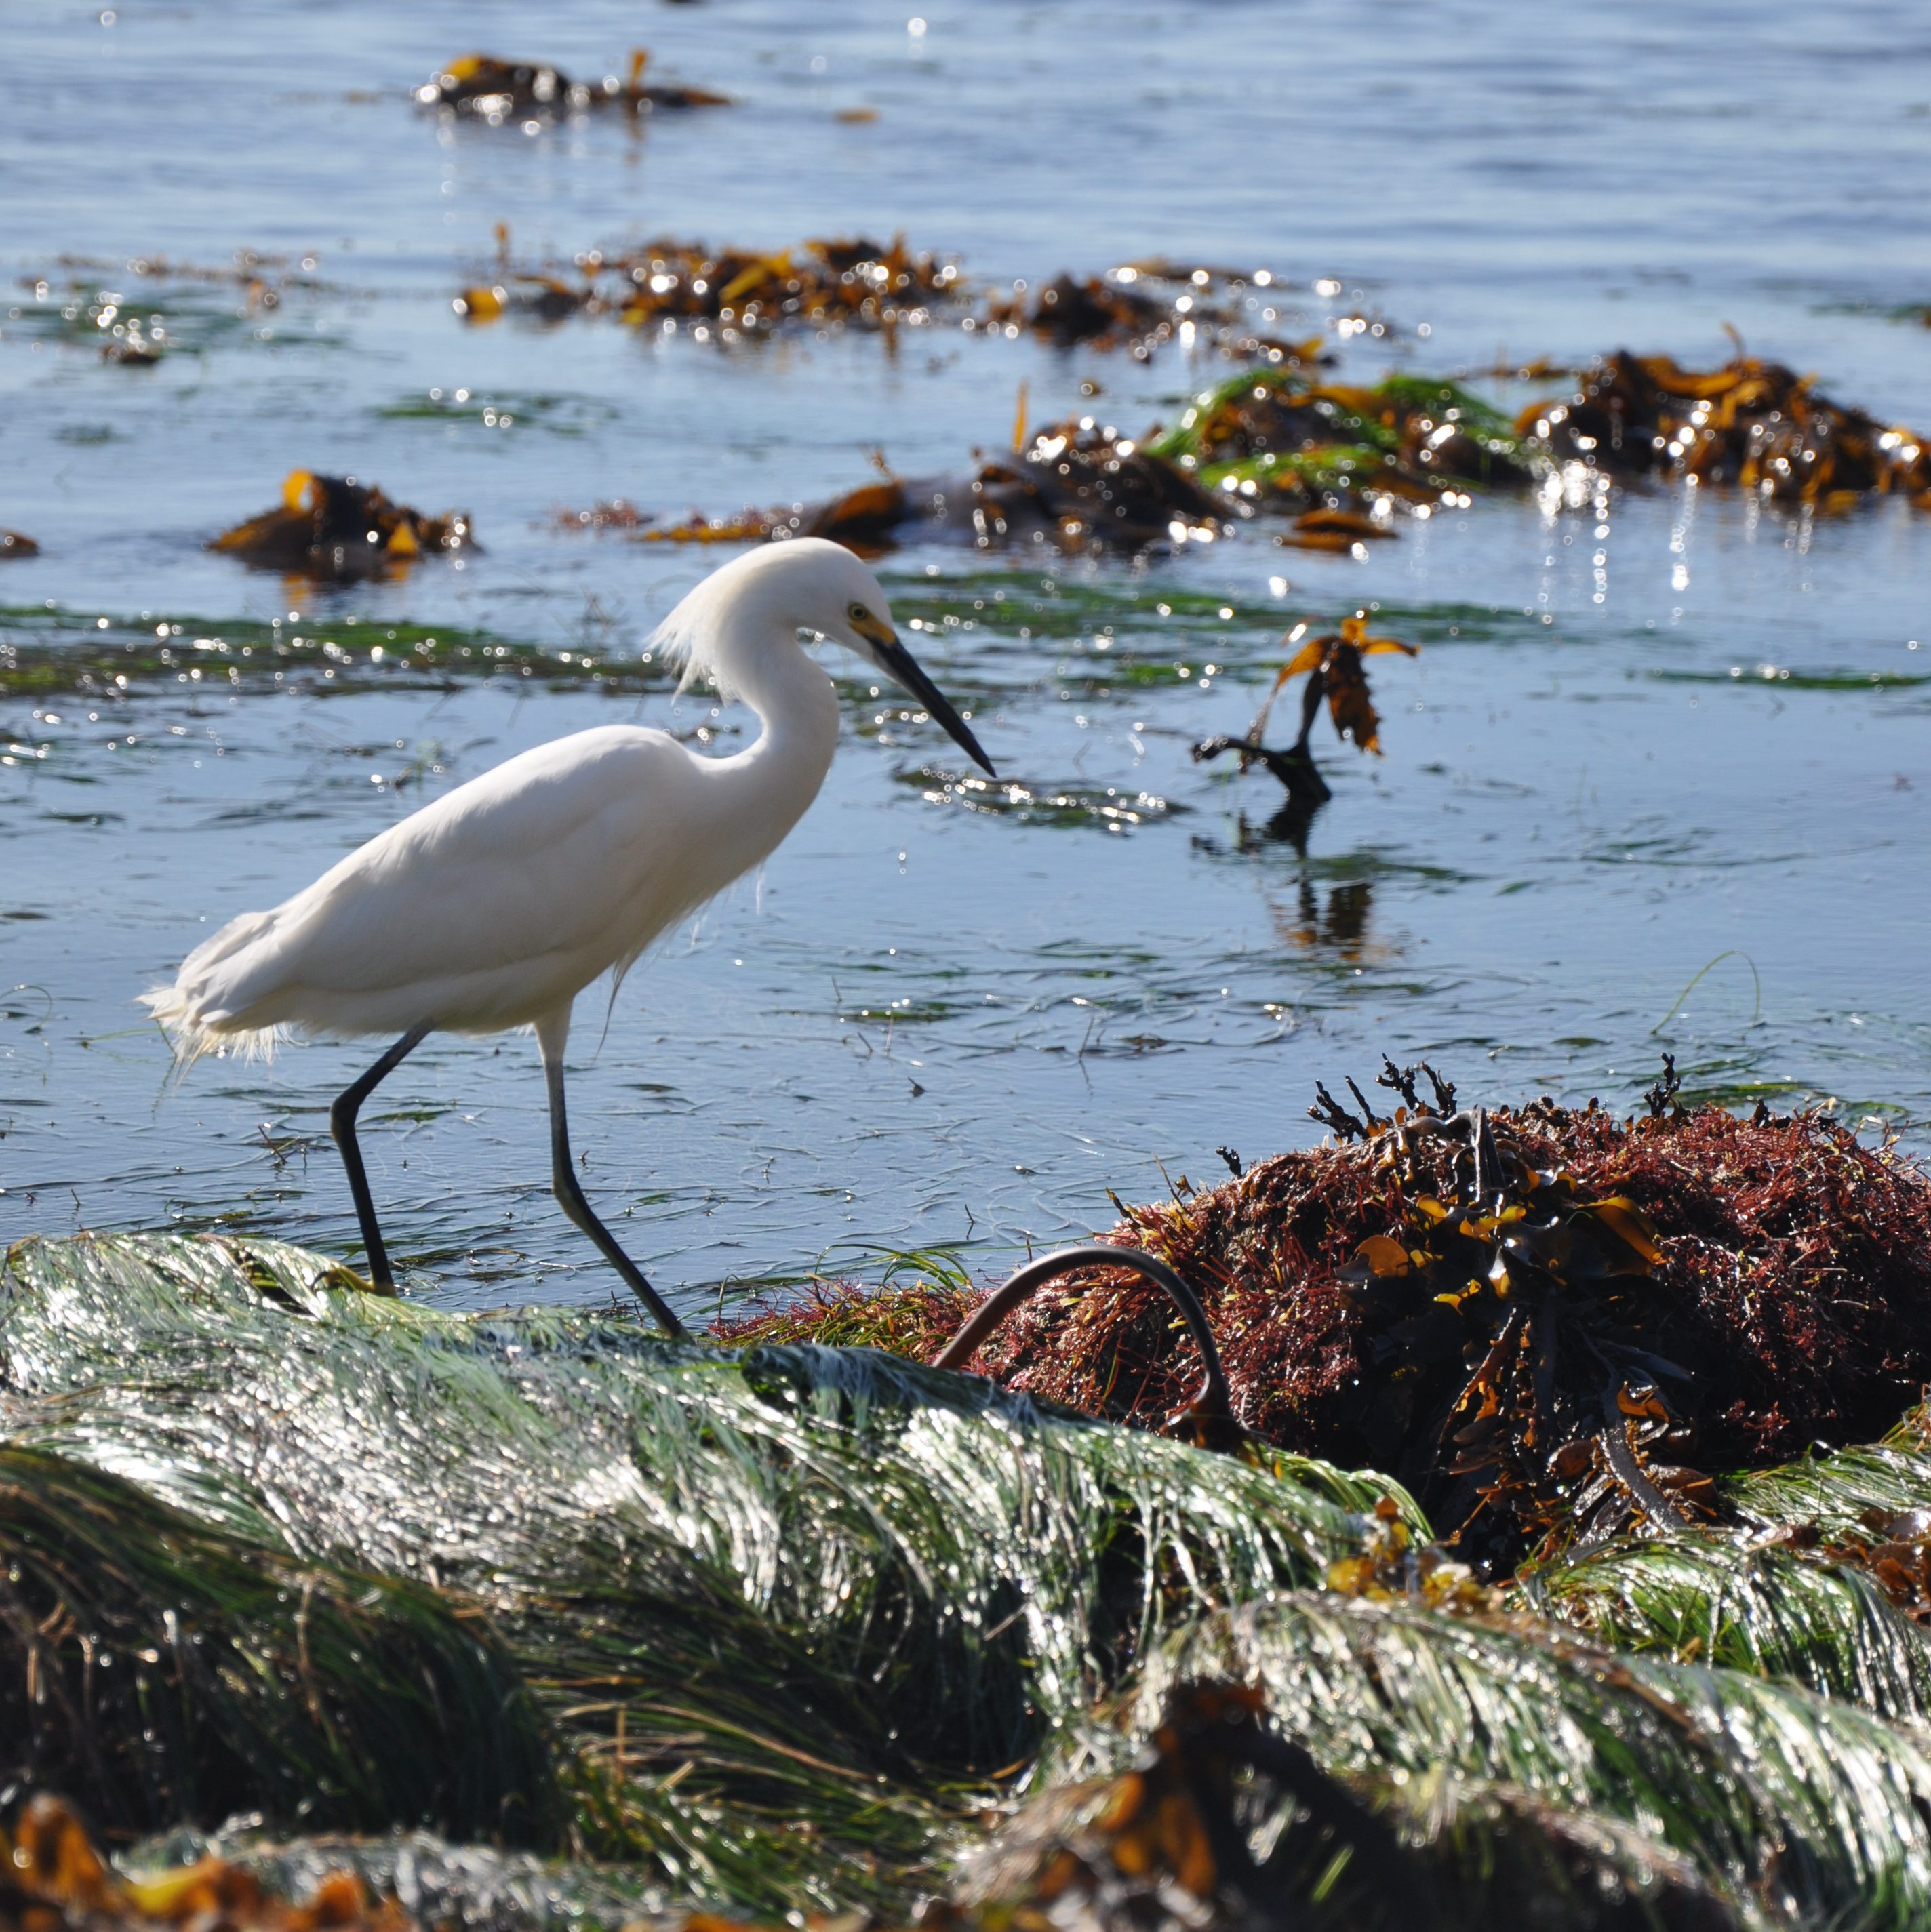 snowy egret, wading birds, herons, rocky intertidal, shore birds, tide pools, california seashores, tides